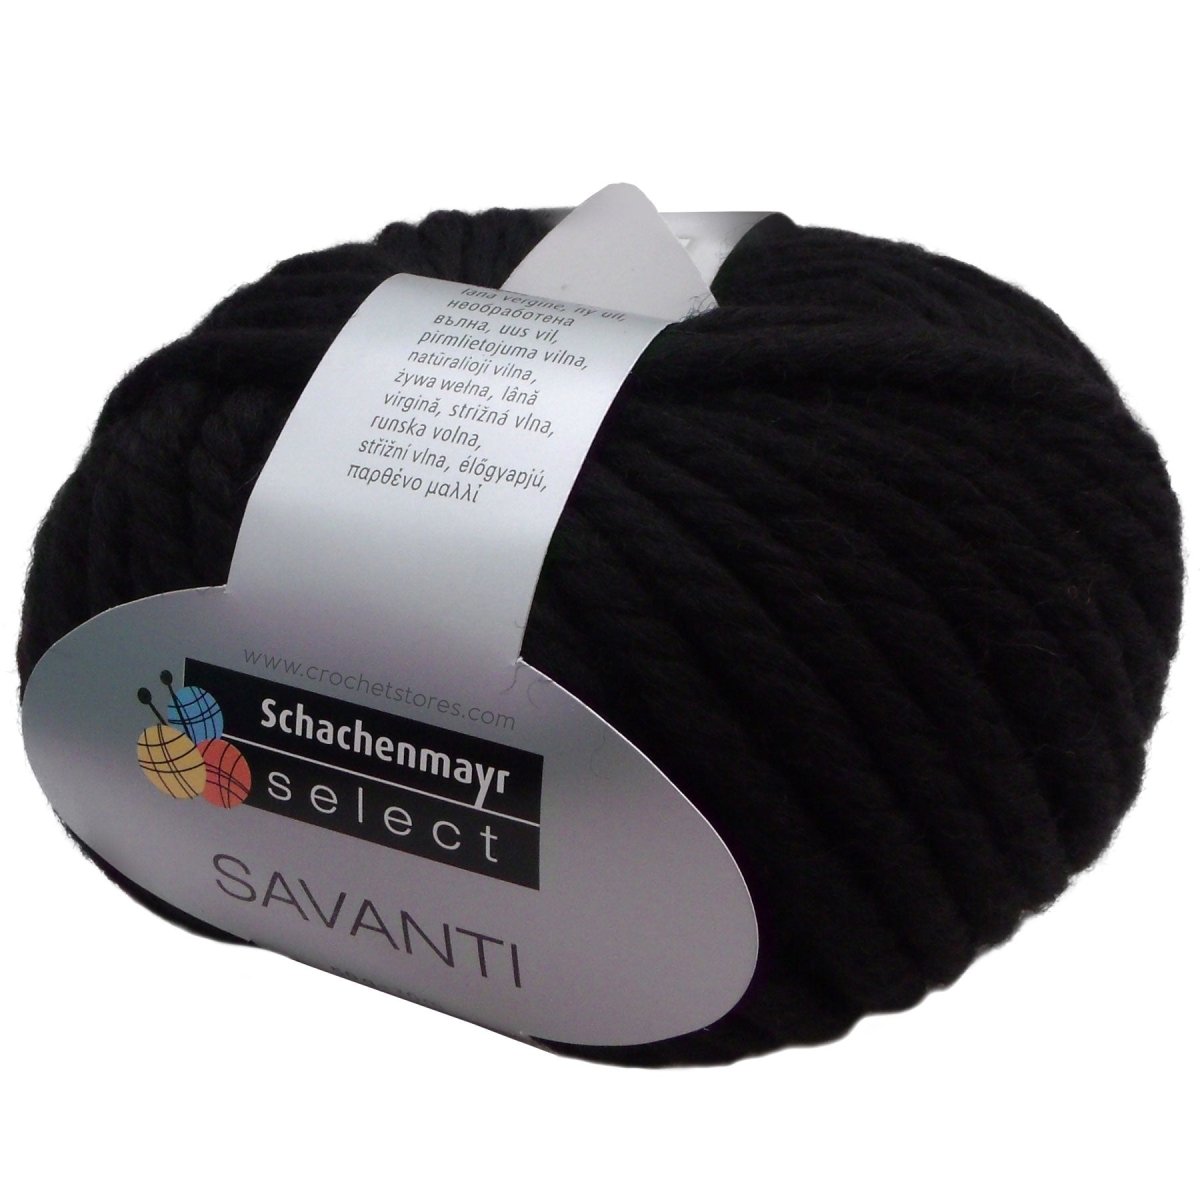 SAVANTI - Crochetstores9811771-47144082700488254